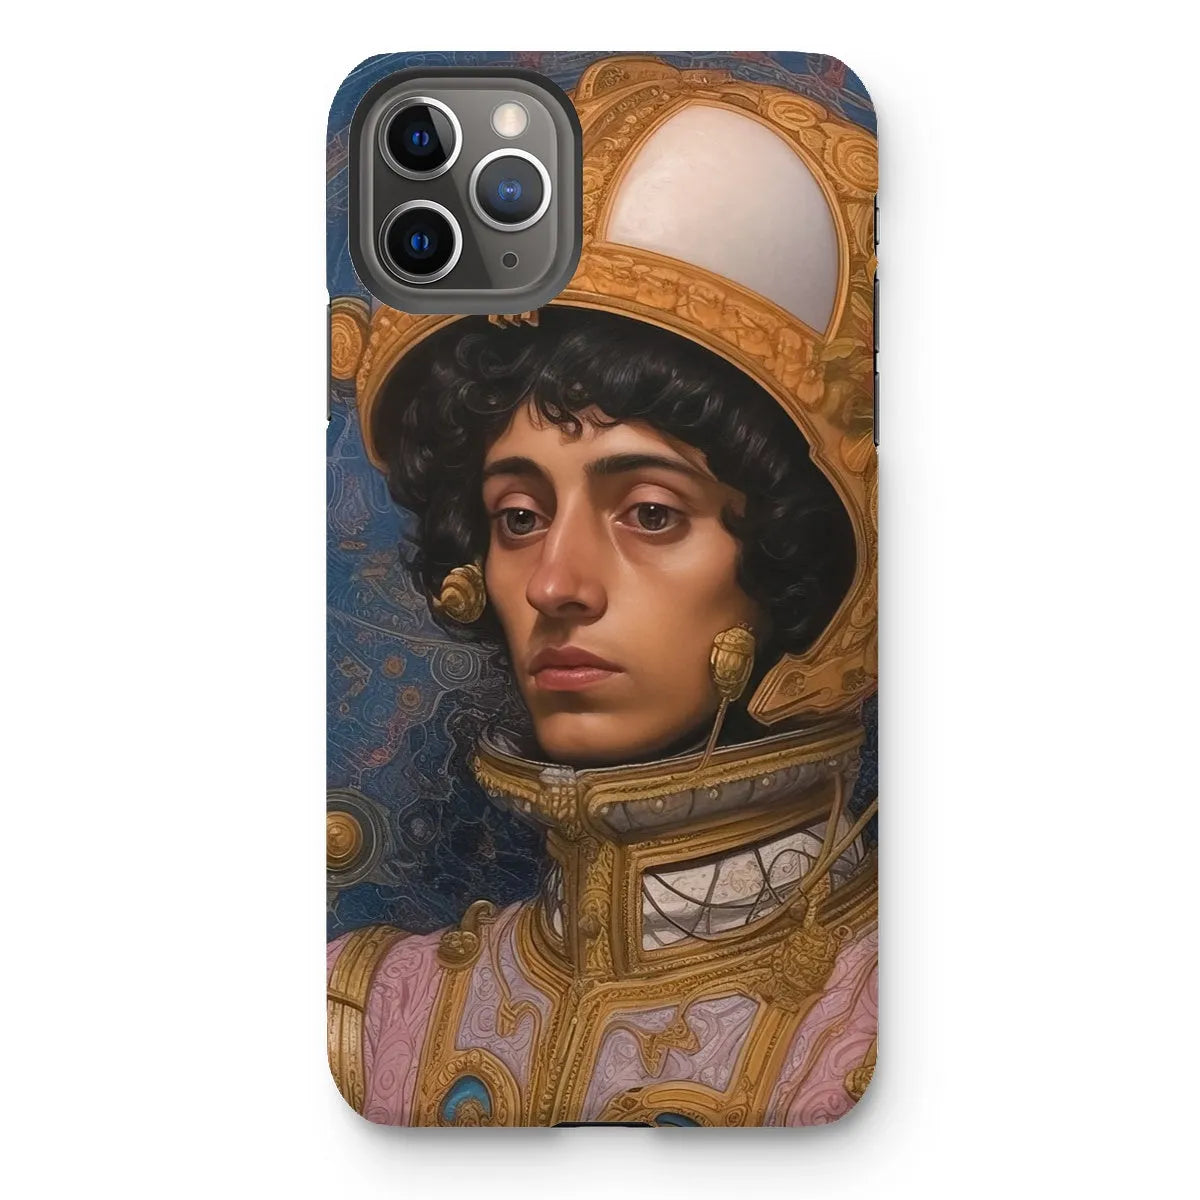 Samir The Gay Astronaut - Lgbtq Art Phone Case - Iphone 11 Pro Max / Matte - Mobile Phone Cases - Aesthetic Art